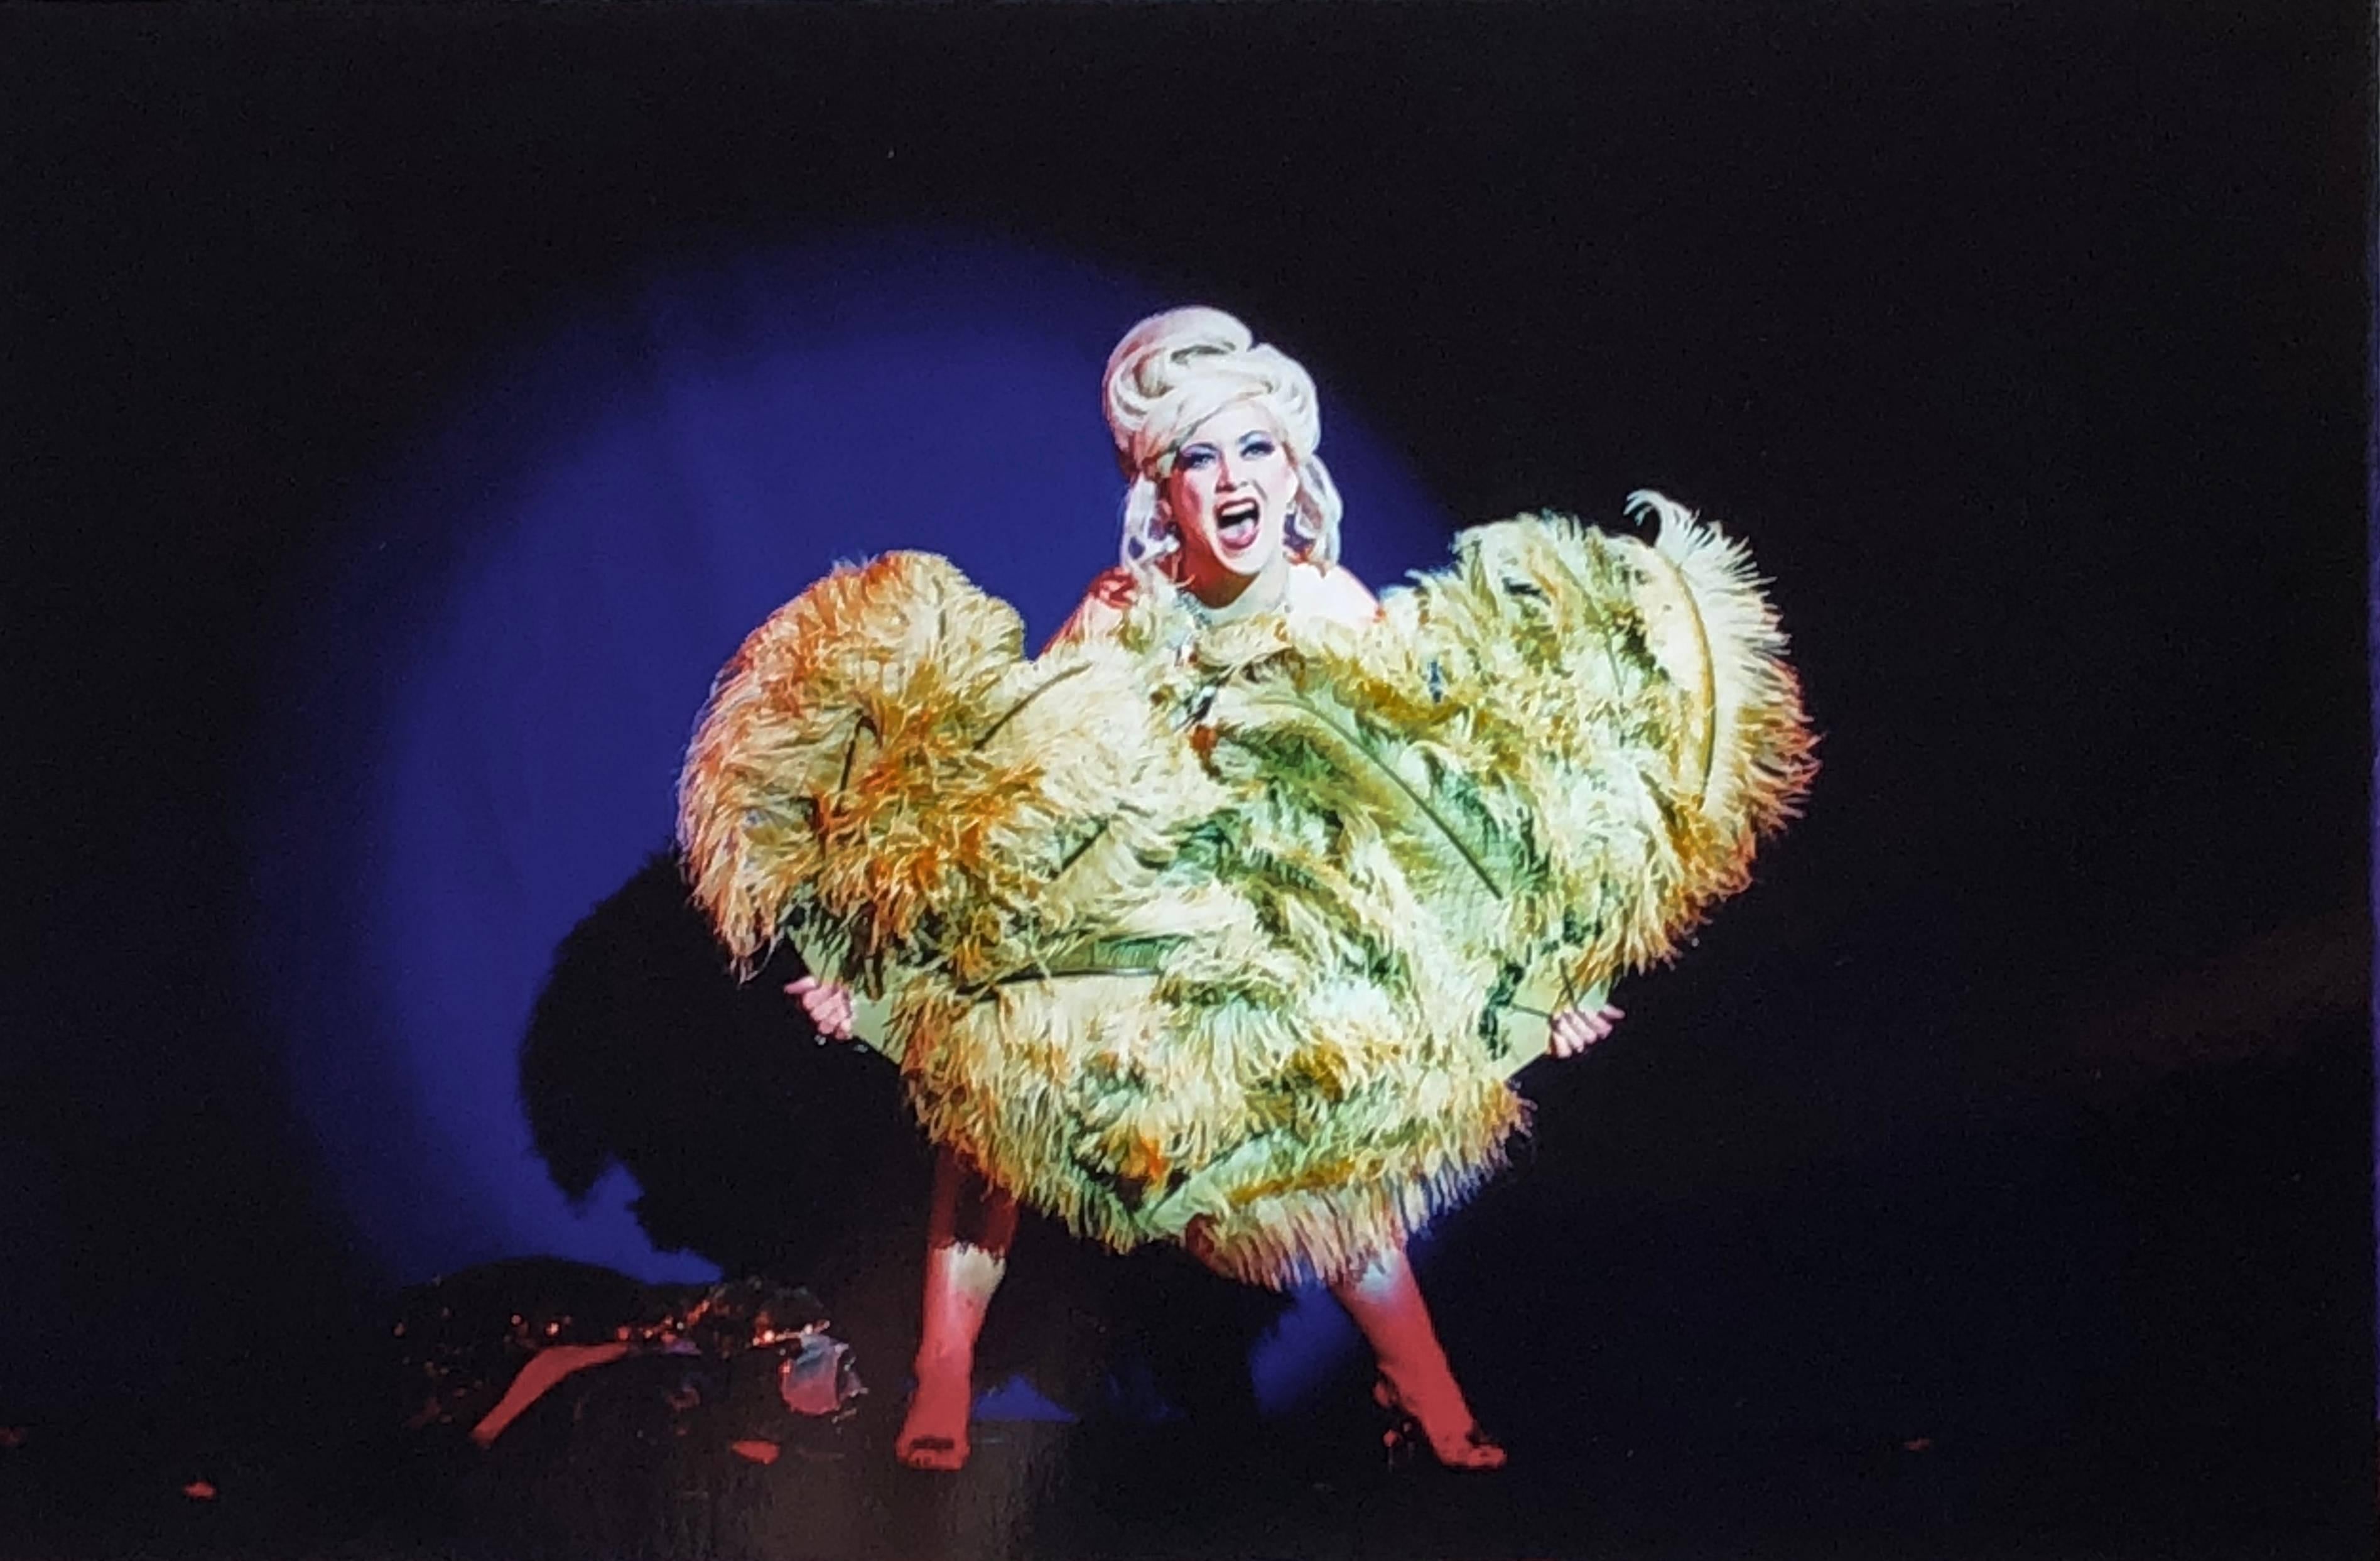 Richard Heeps Nude Photograph - Burlesque Series, Martini Fan Dance XIV, Tease-O-Rama, Hollywood, Los Angeles